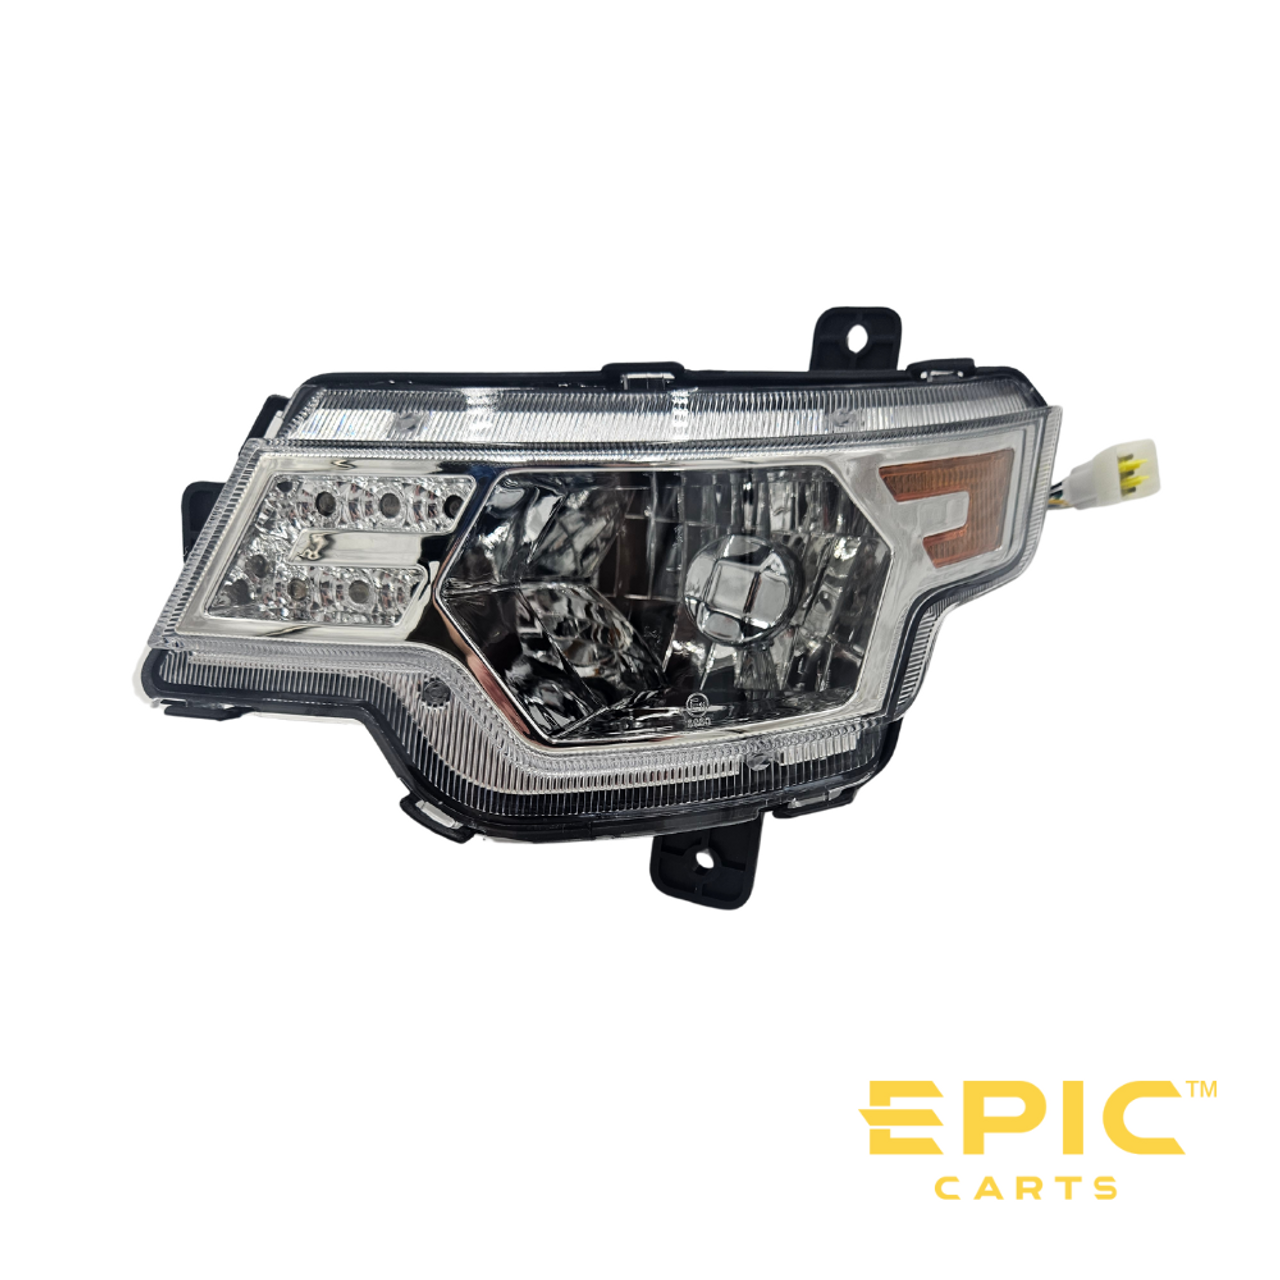 Driver Side (Left) Front Headlight for EPIC Golf Cart, LIGHT-EP503, 3208050058